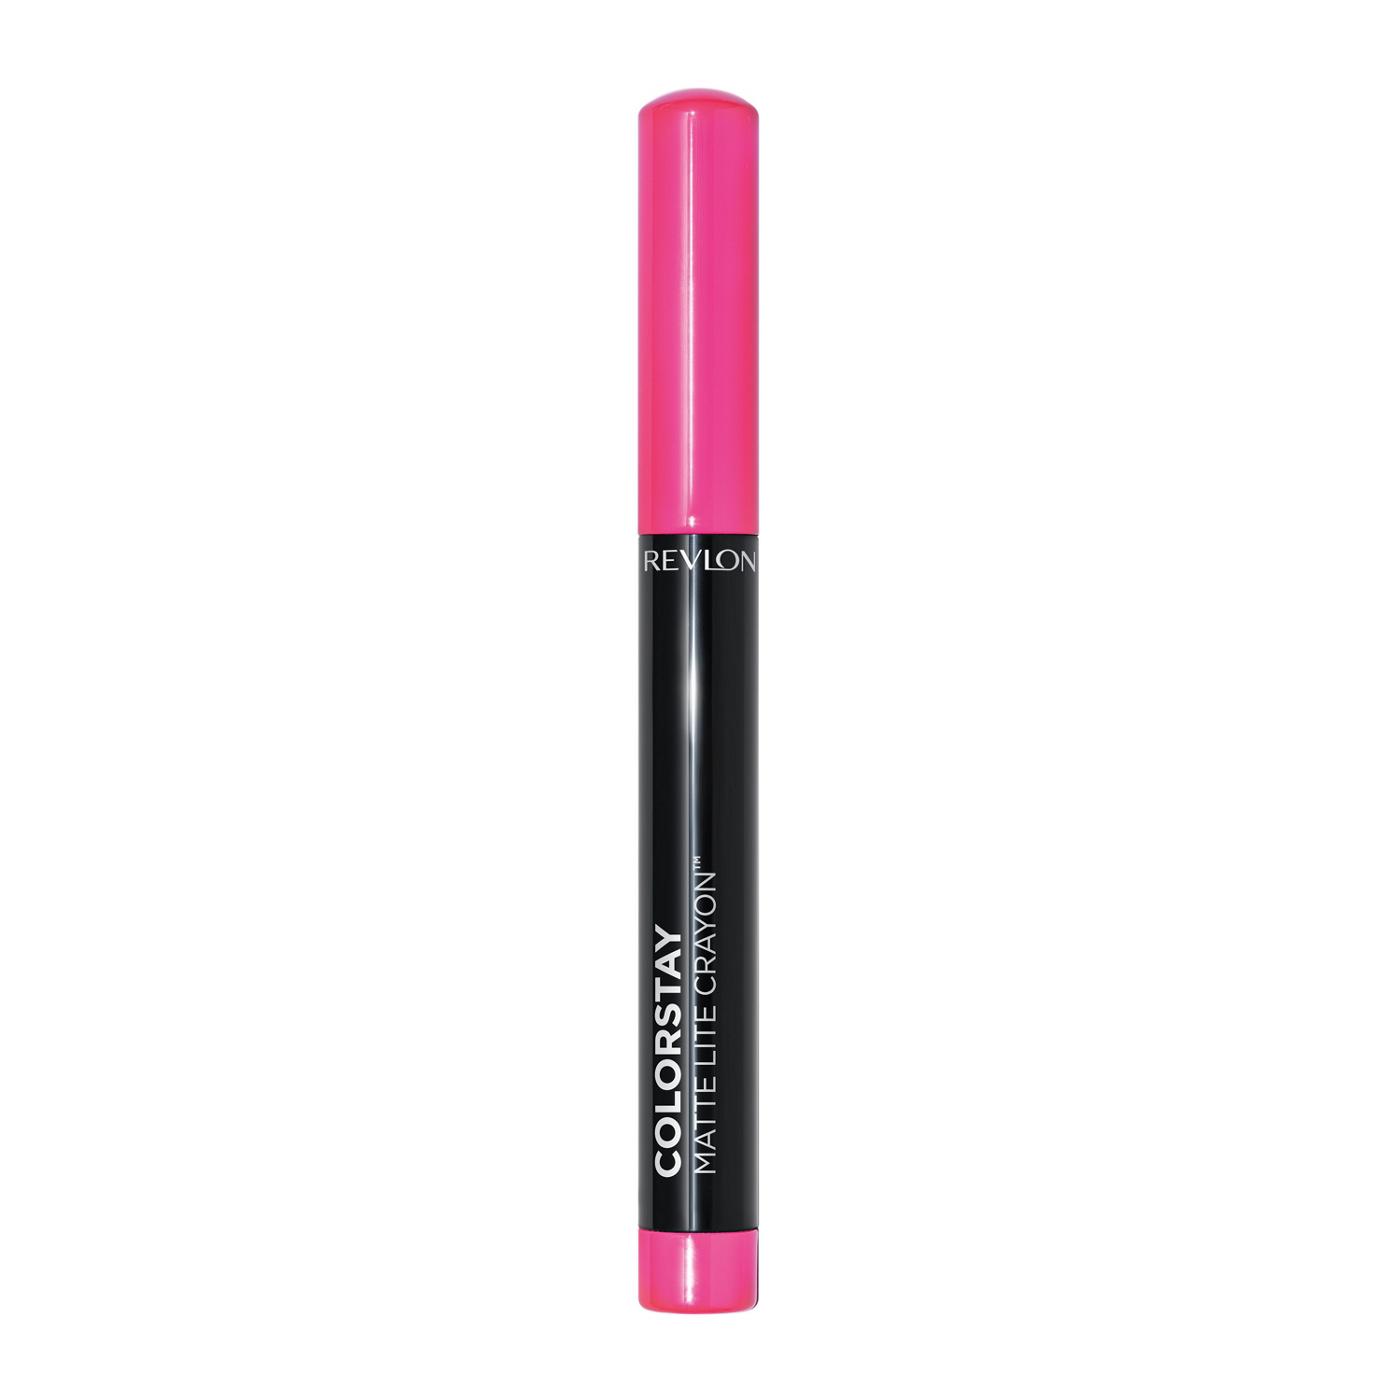 Revlon ColorStay Matte Lite Crayon Lipstick - Lift Off; image 1 of 7